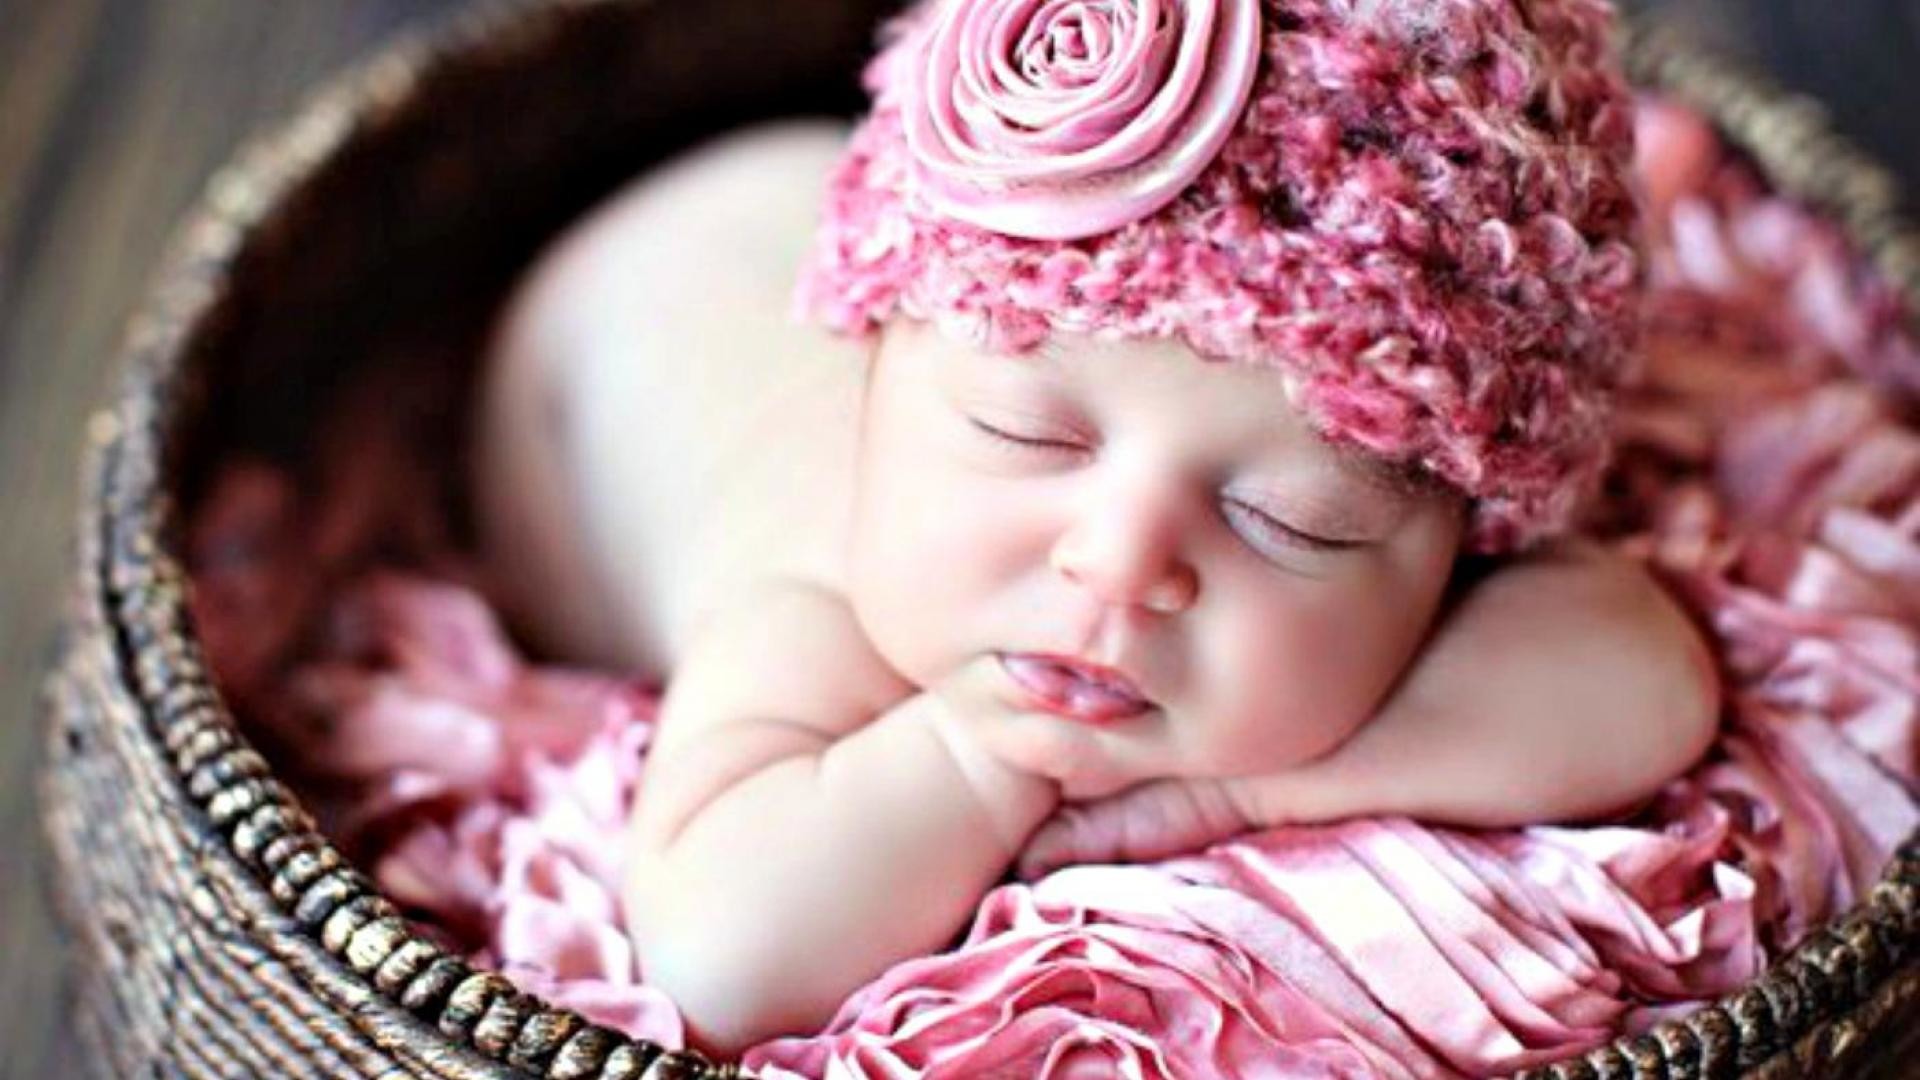 baby wallpaper hd download,child,baby,pink,photograph,cheek